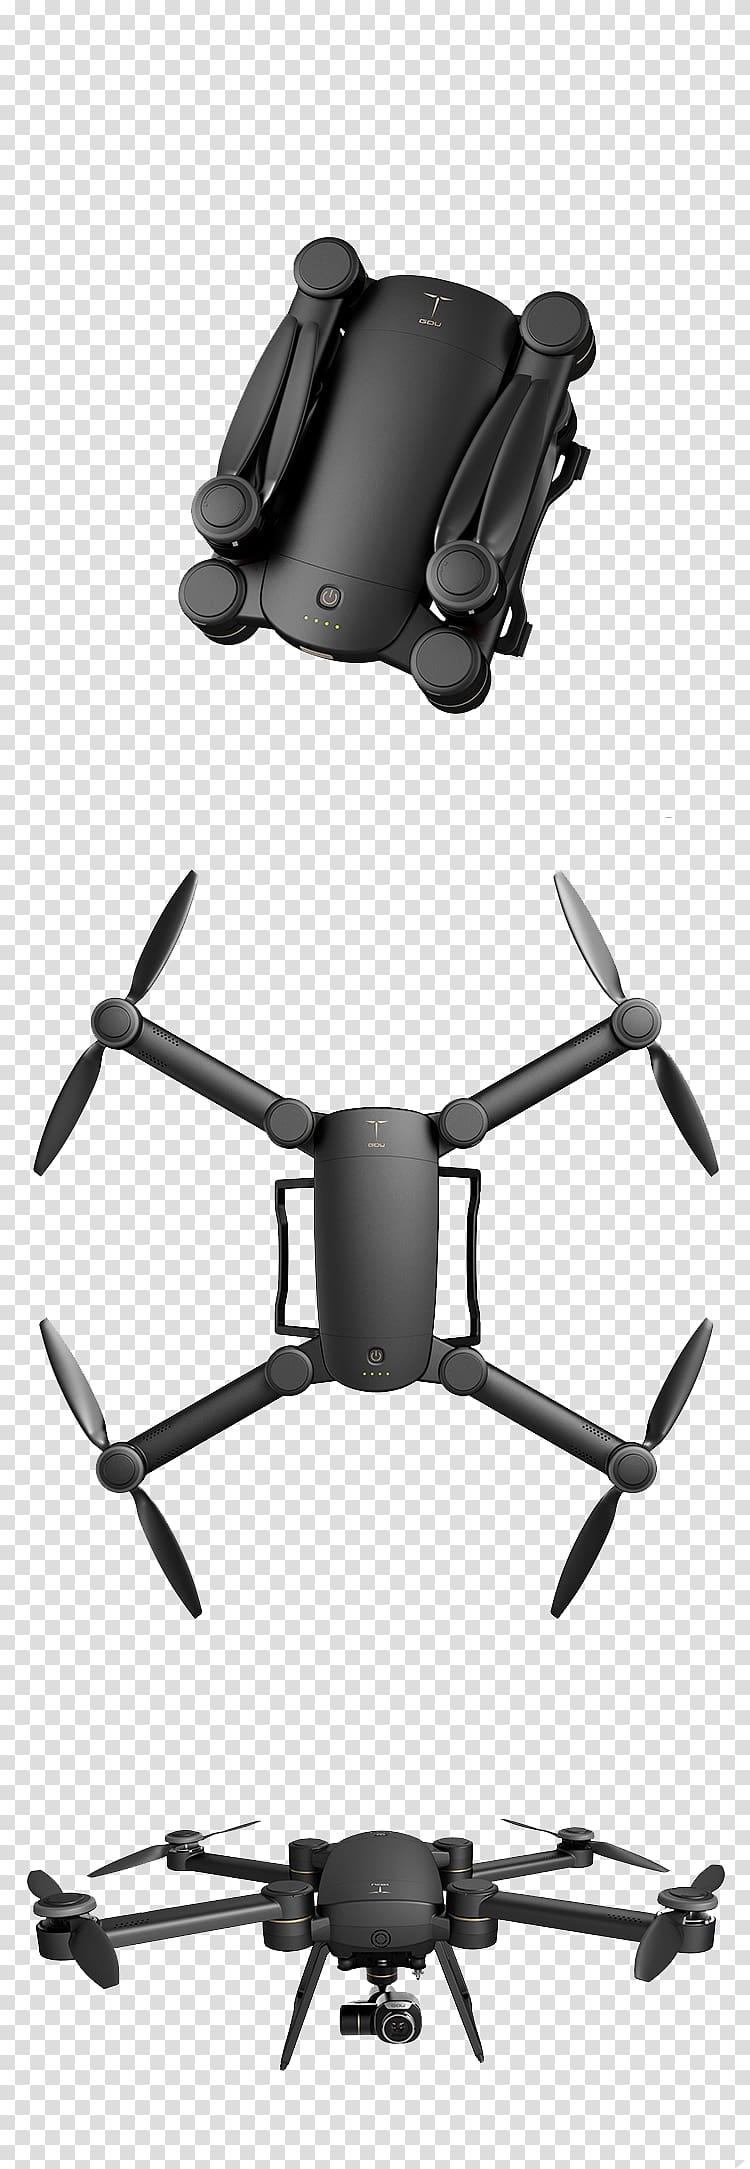 Unmanned aerial vehicle Quadcopter 4K resolution Camera Gimbal, UAV transparent background PNG clipart